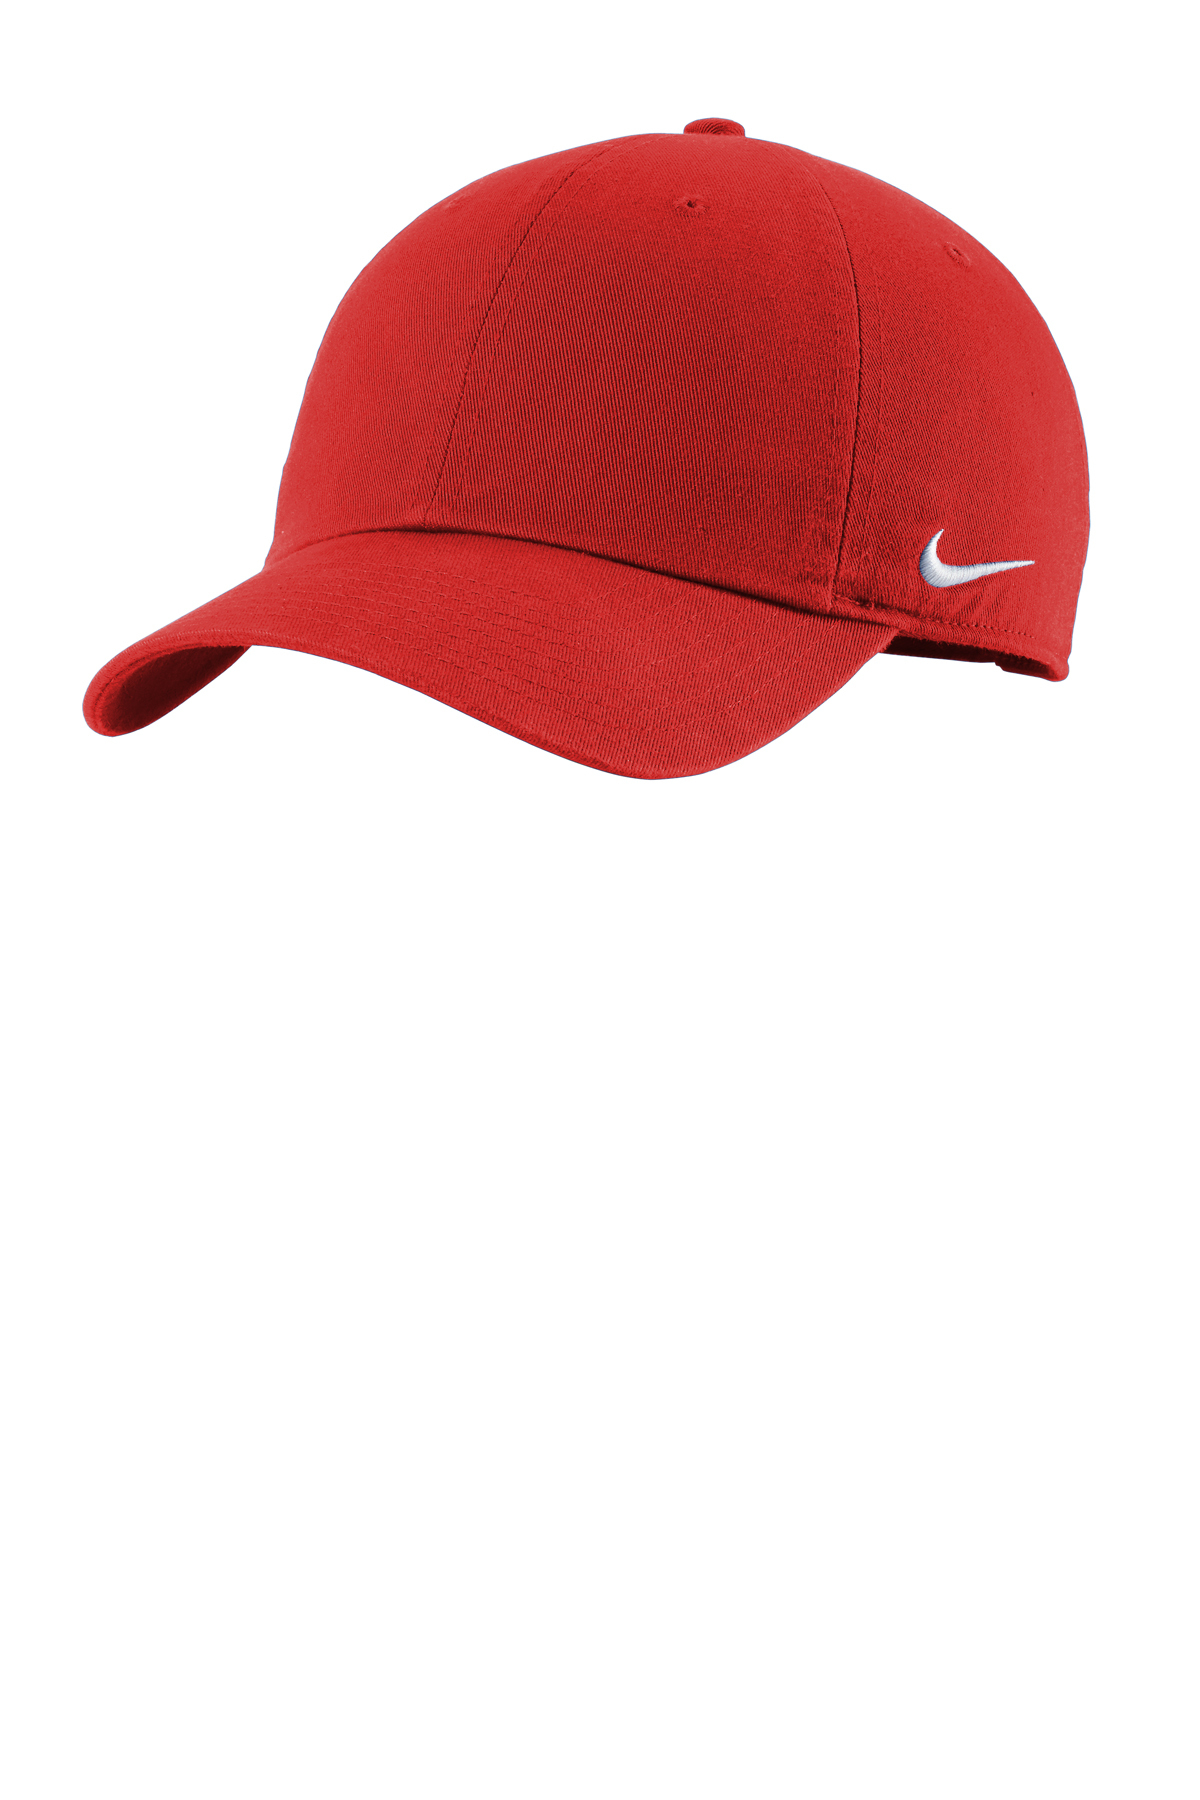 Nike Heritage Cotton Twill Cap Product | SanMar 